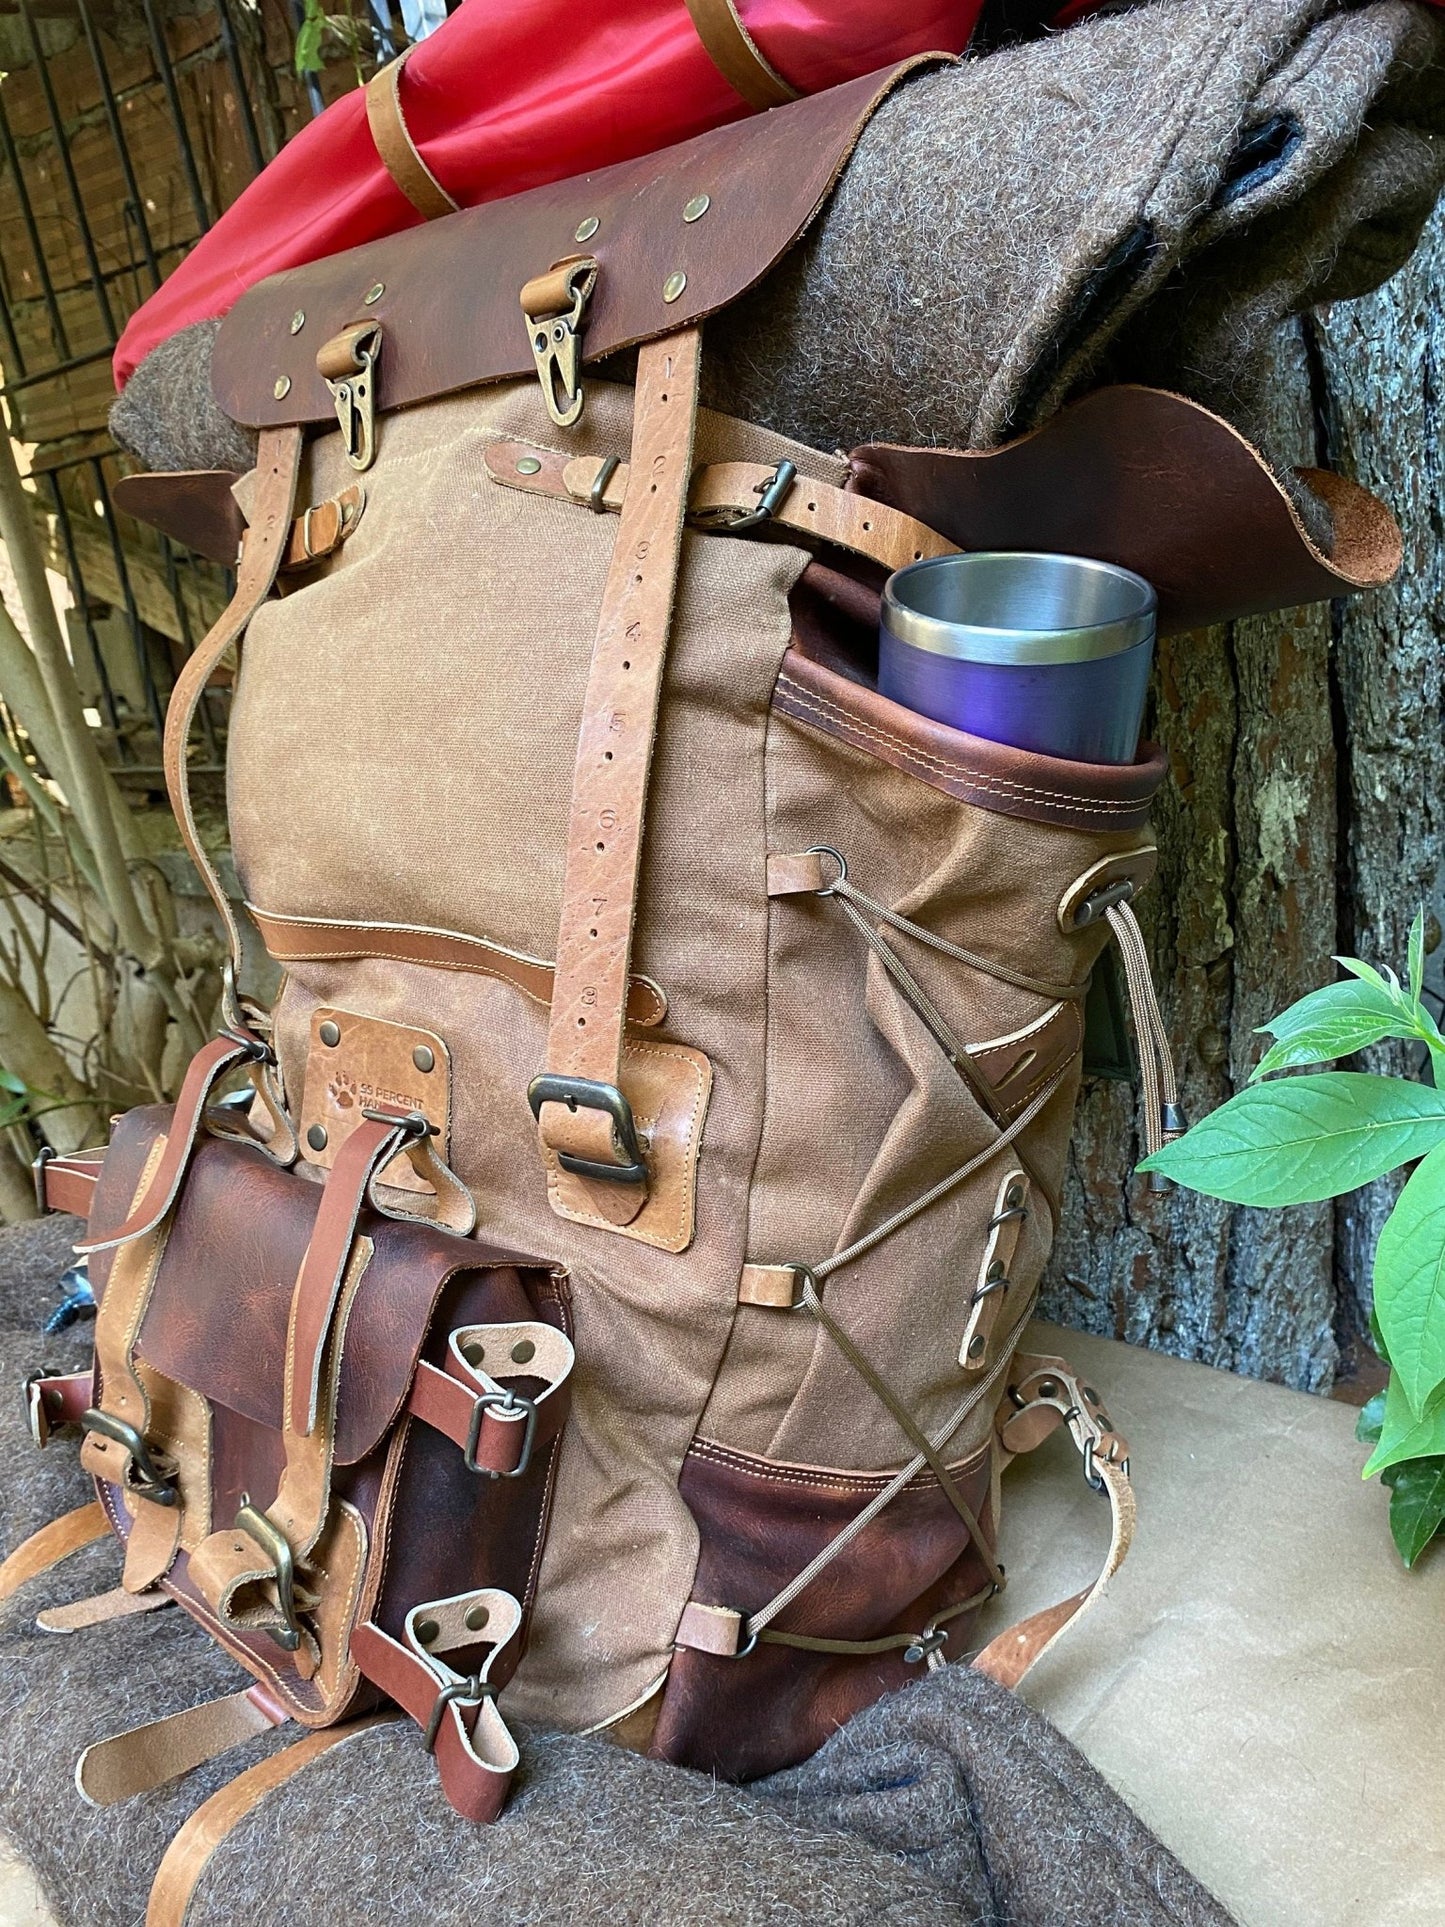 Vintage Leather Backpack | Bag | Waxed Canvas Backpack | Handmade Daypack - Travel - Camping- Hiking- Bushcraft | Rucksack | Personalization bushcraft - camping - hiking backpack 99percenthandmade   